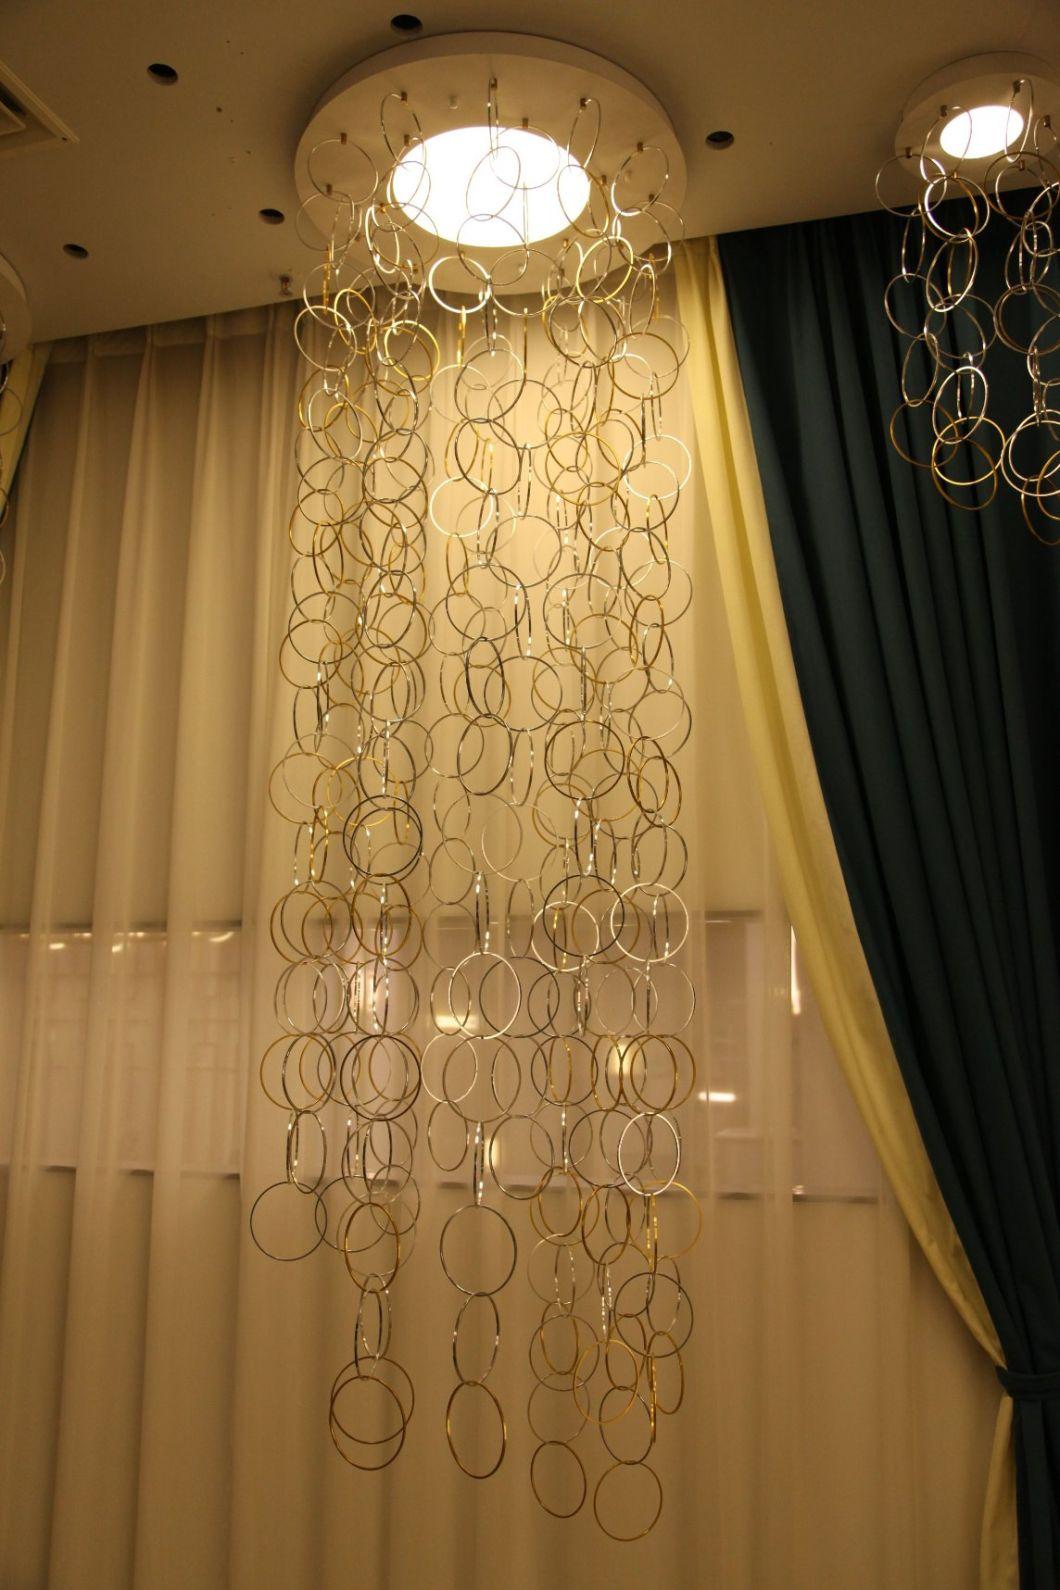 Masivel Golden Circle LED Chandelier Indoor Pendant Lighting